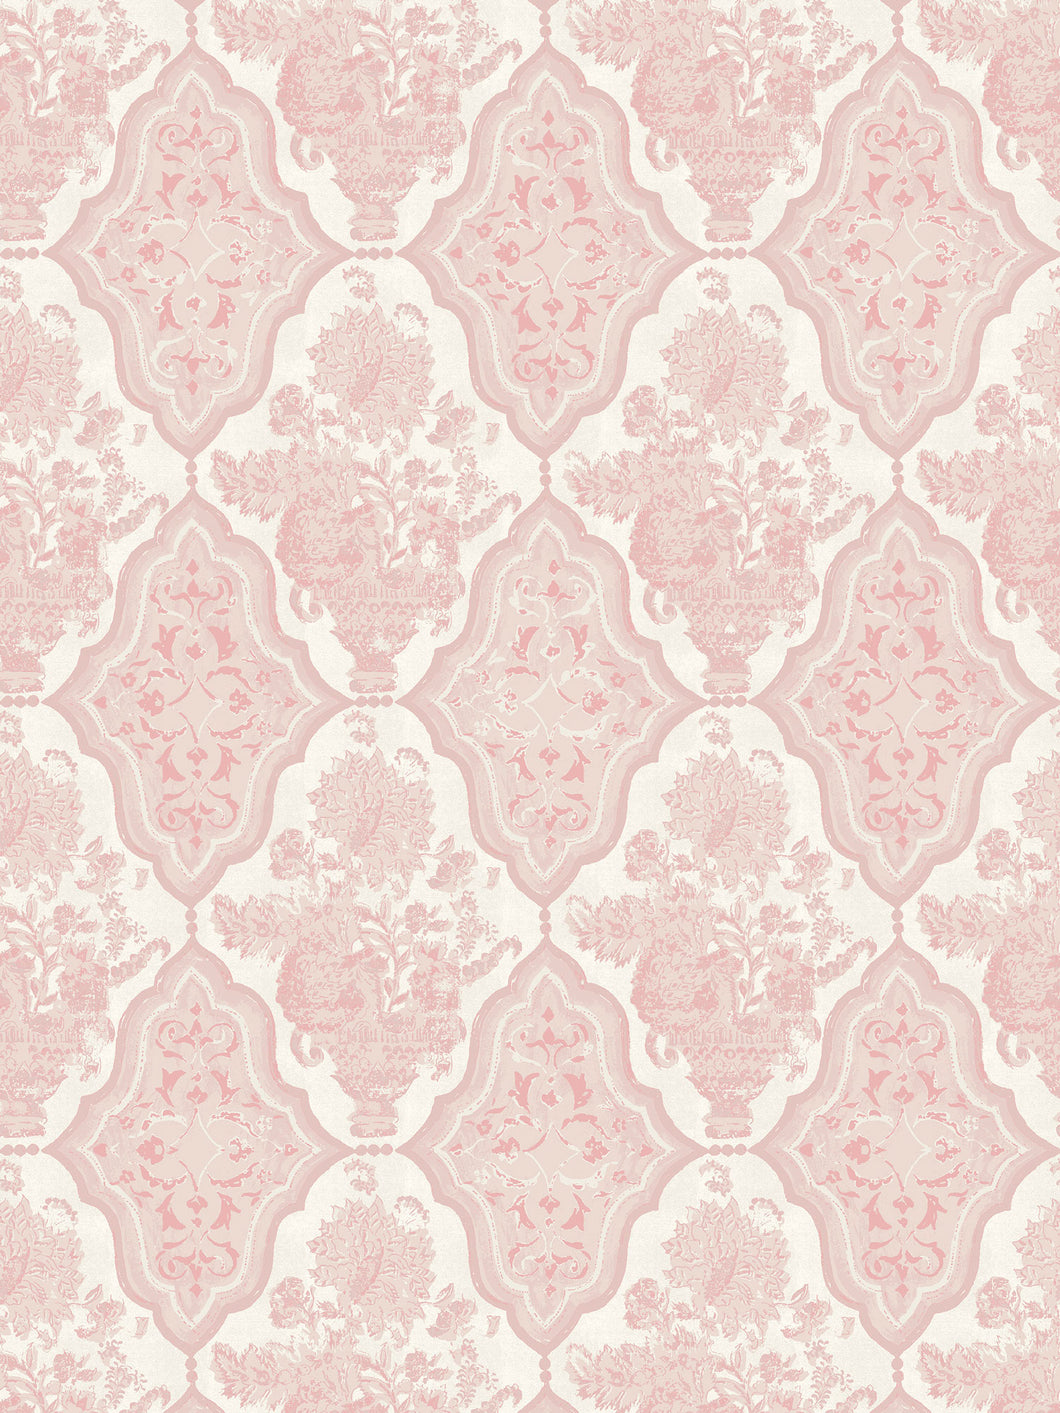 Dado Atelier rose cameo vase wallpaper